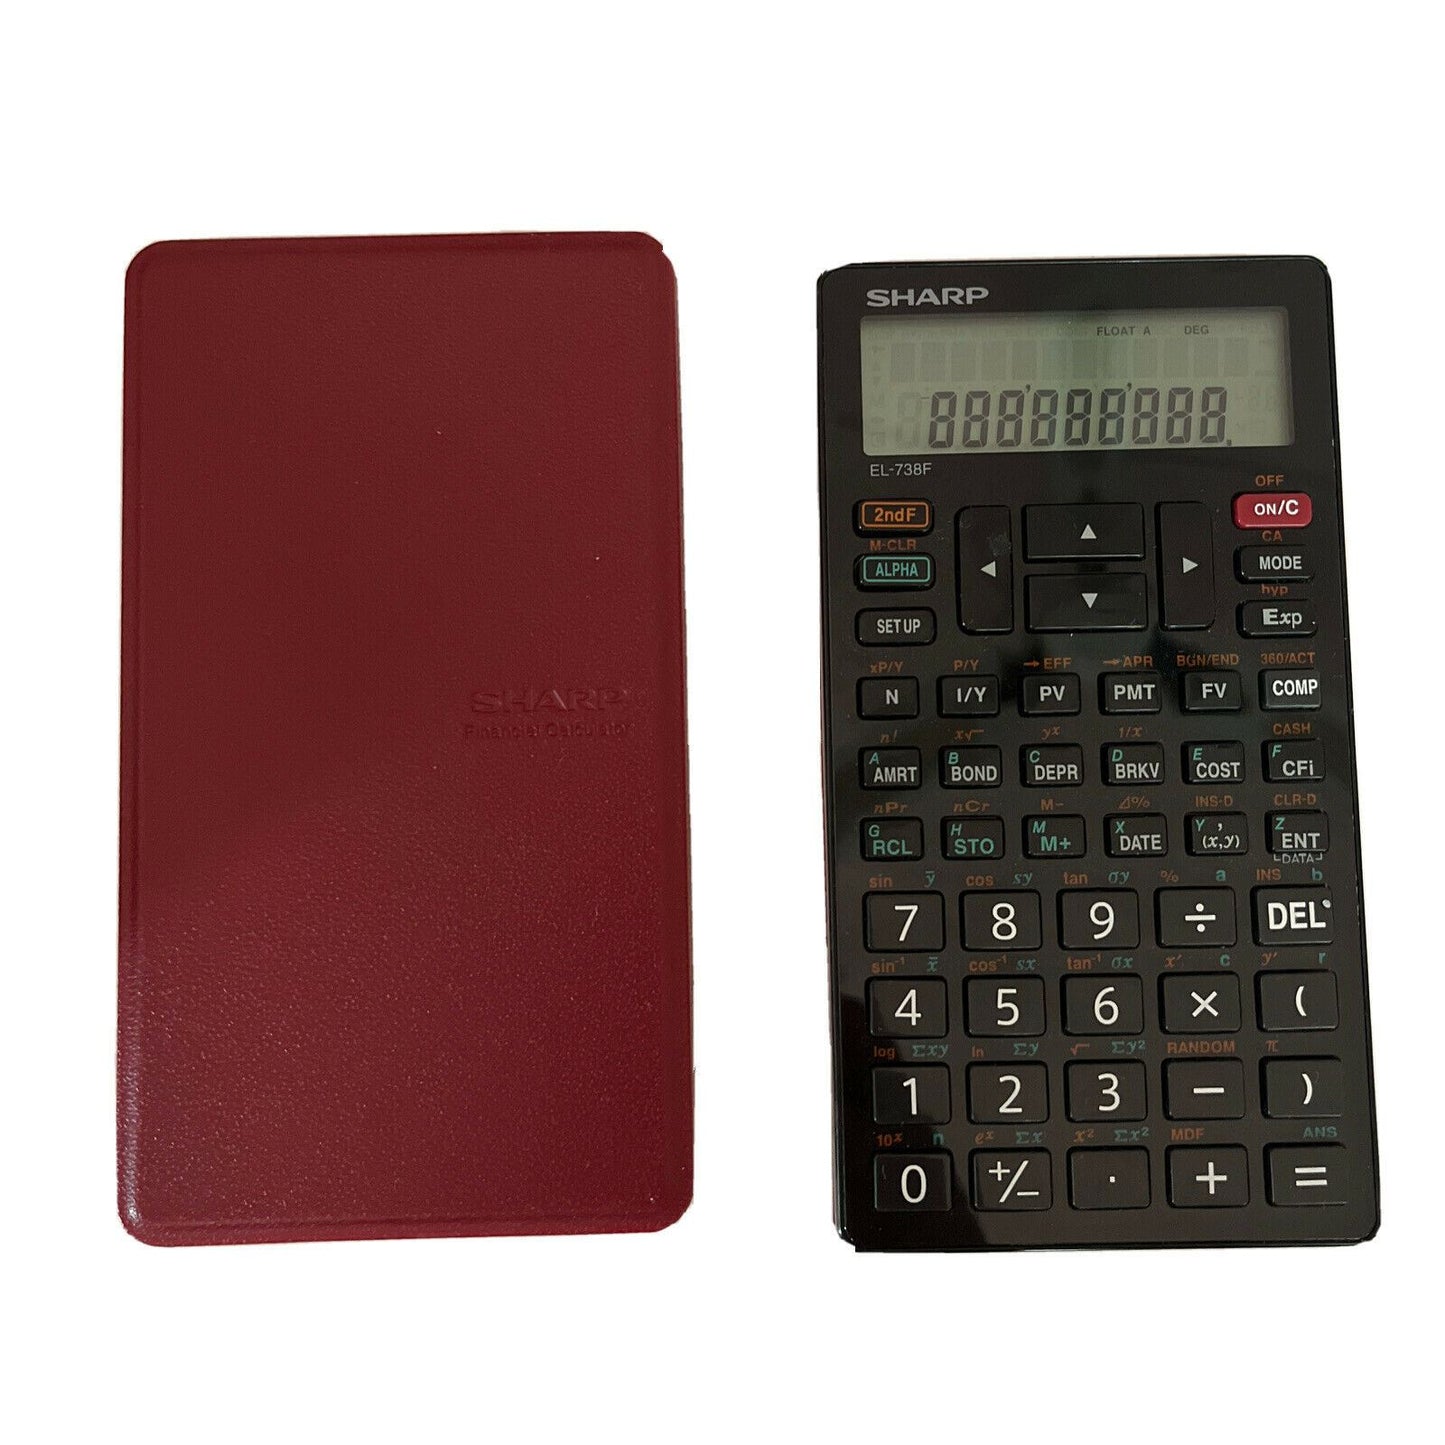 Sharp EL-738F Financial Business Calculator